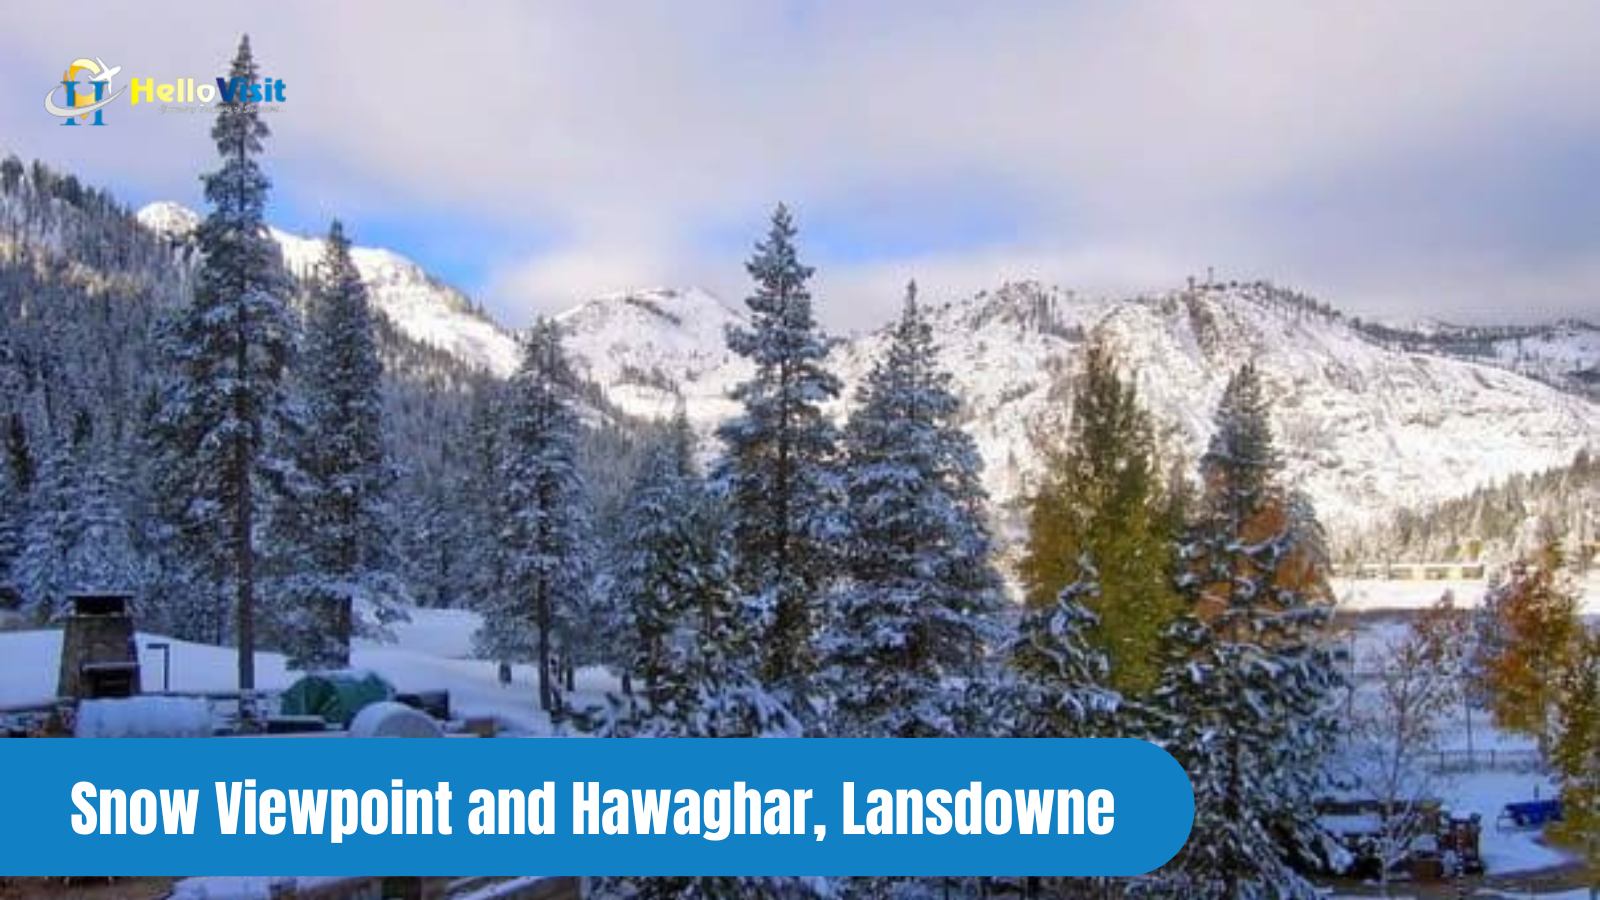 Snow Viewpoint and Hawaghar, Lansdowne